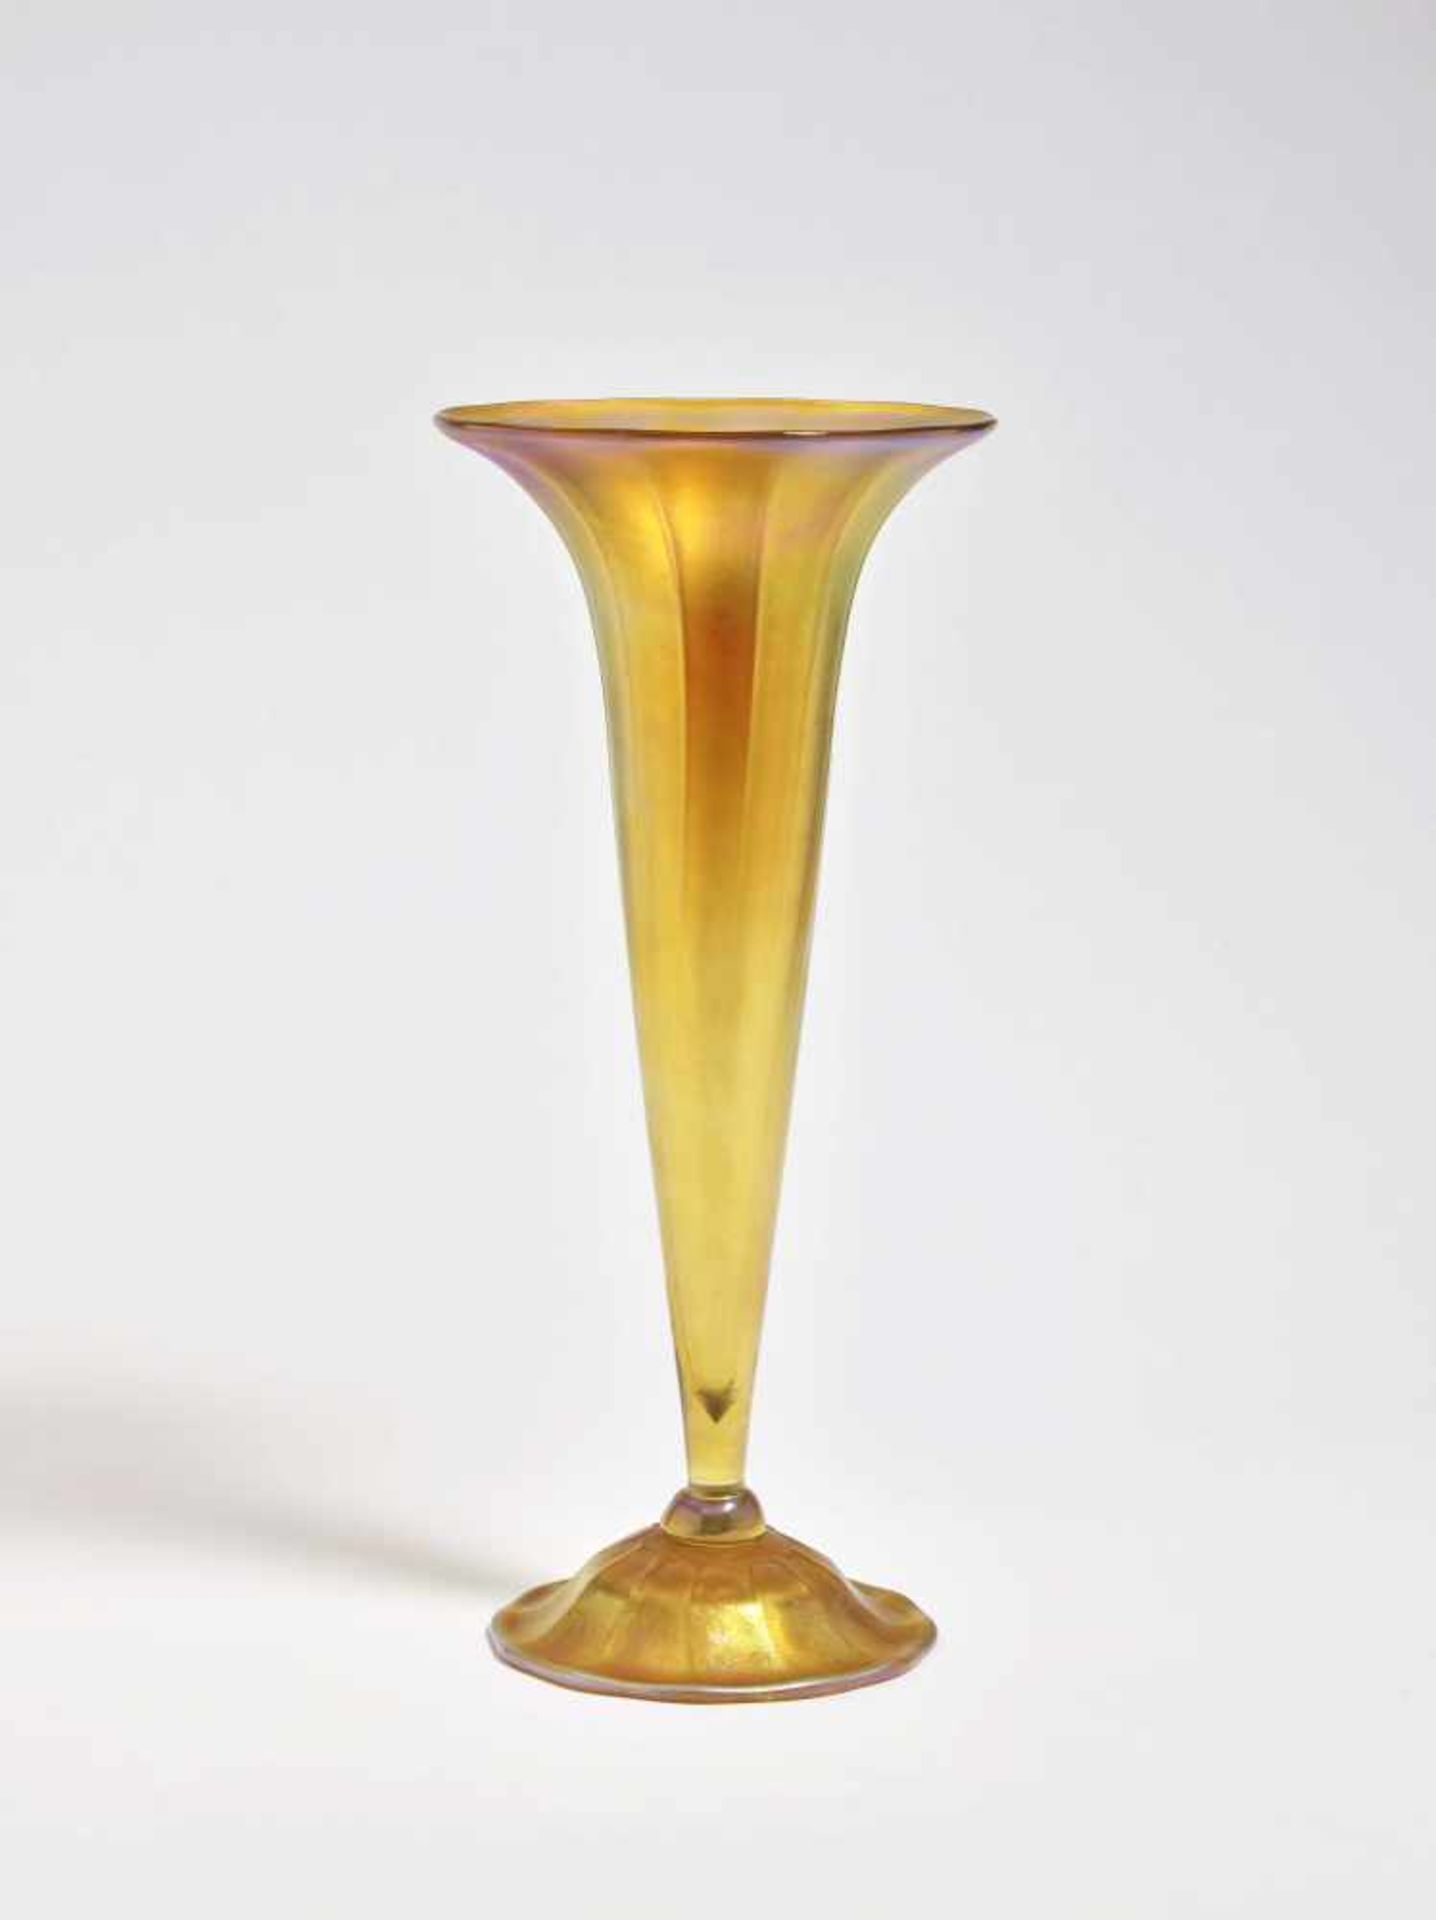 VaseLouis Comfort Tiffany, New York, um 1919 Farbloses Glas. Stark goldfarben lüstriert.